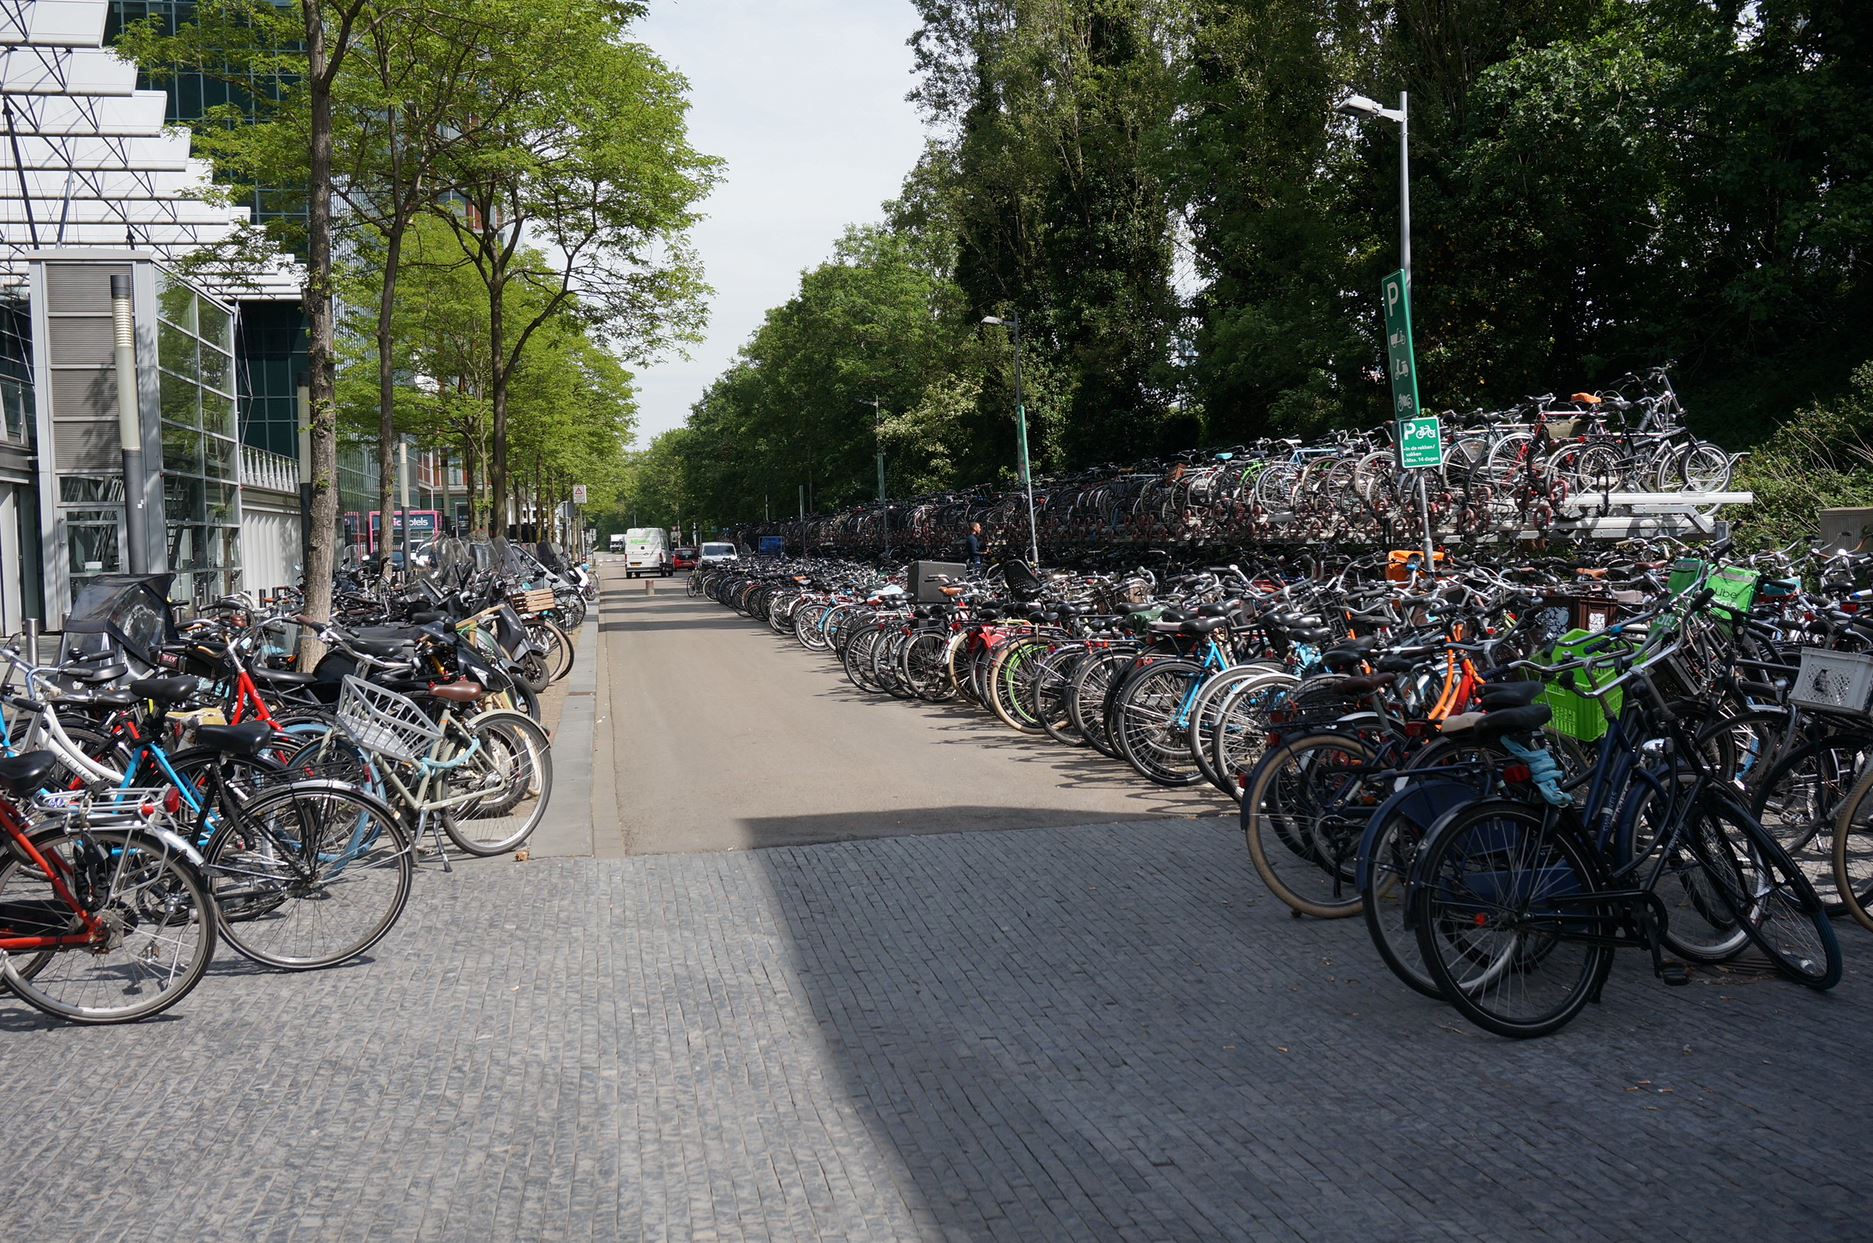 Les parkings vélos en gare - Inddigo, le blog